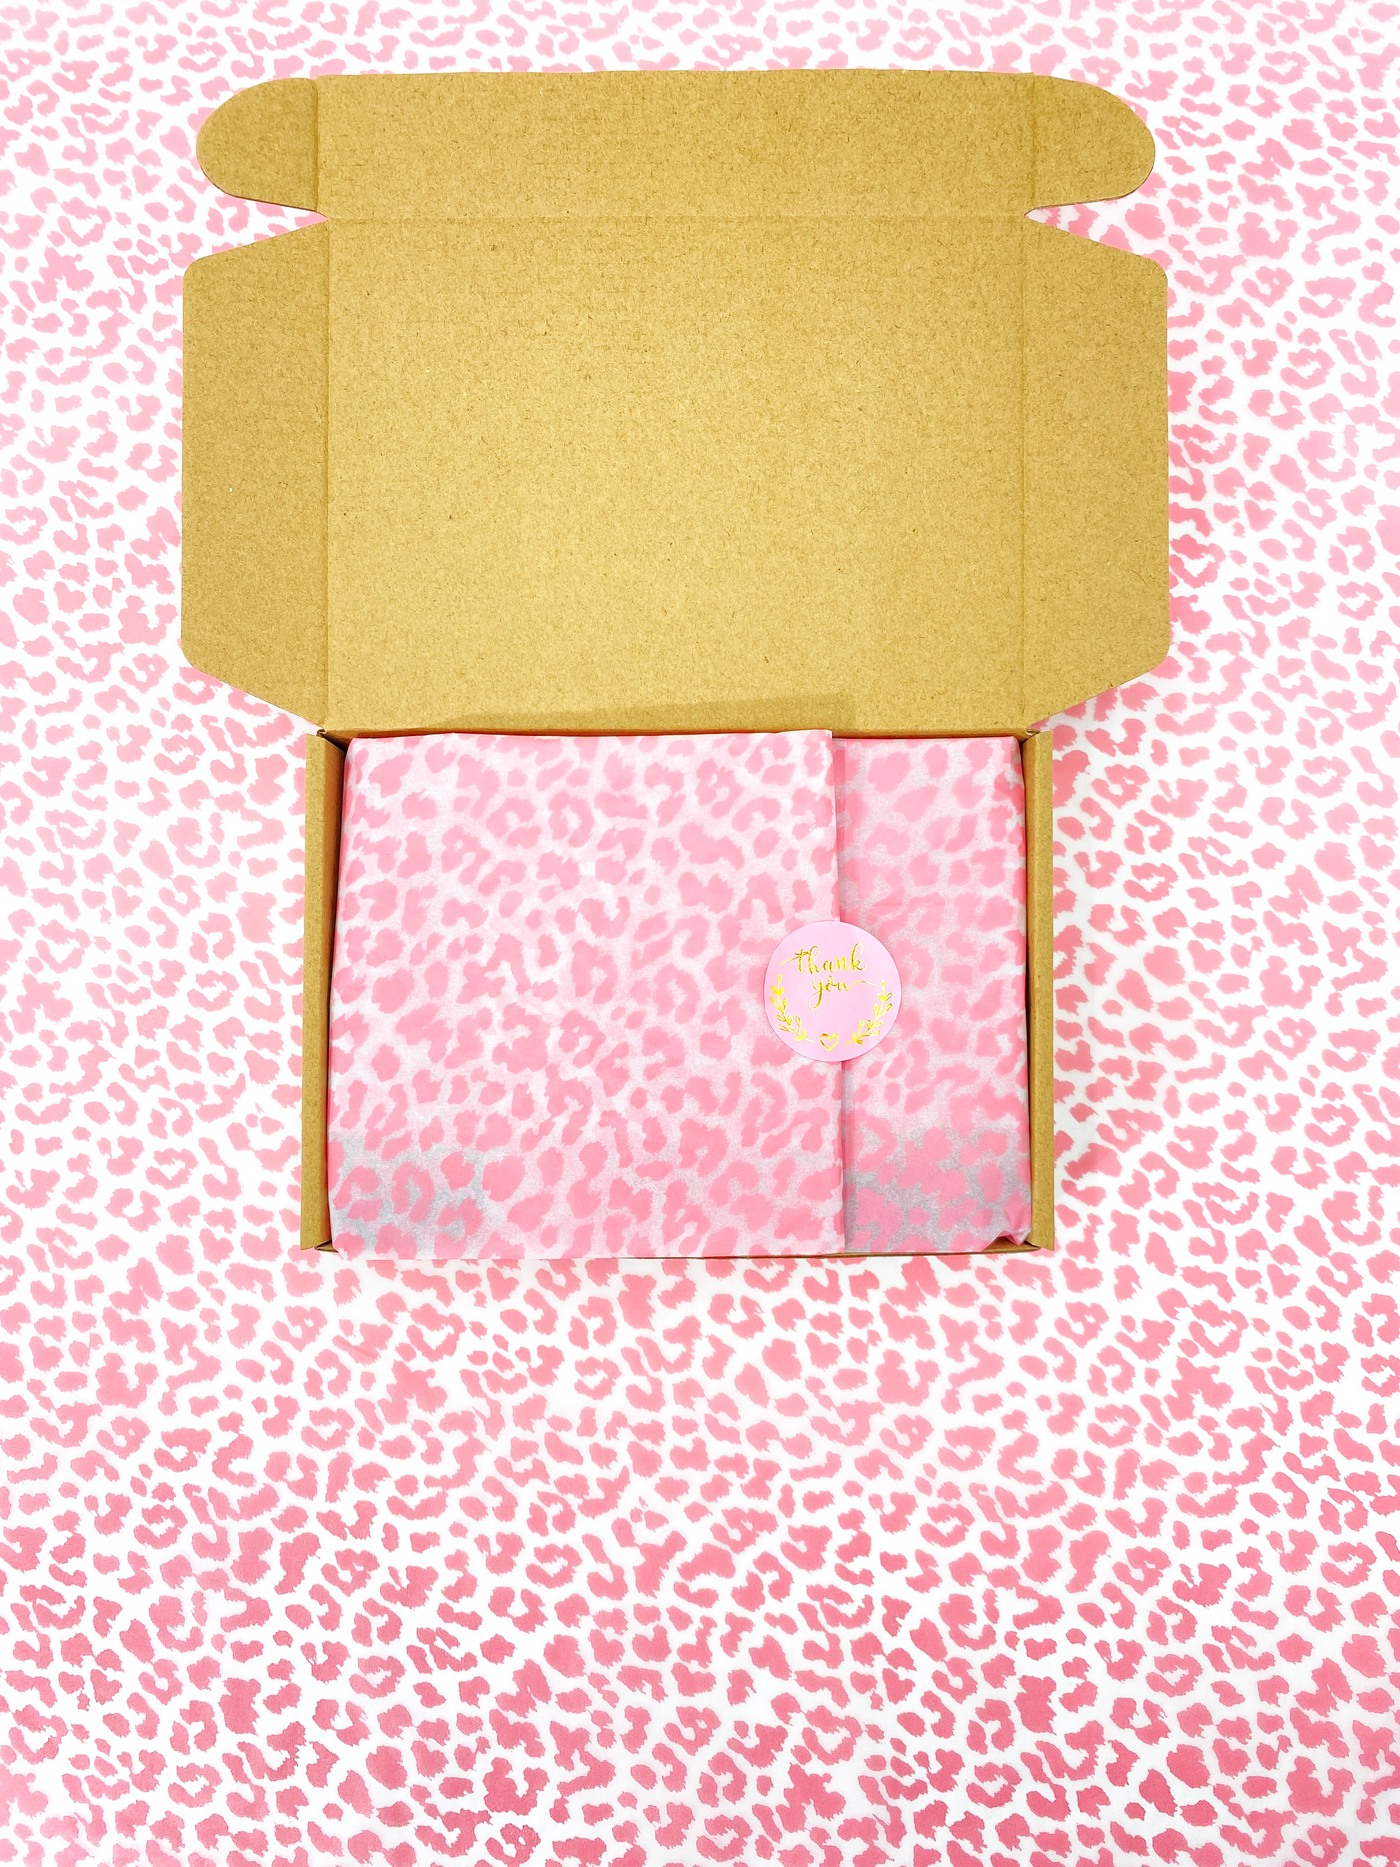 Acid-Free Tissue Paper - Pink Leopard Print